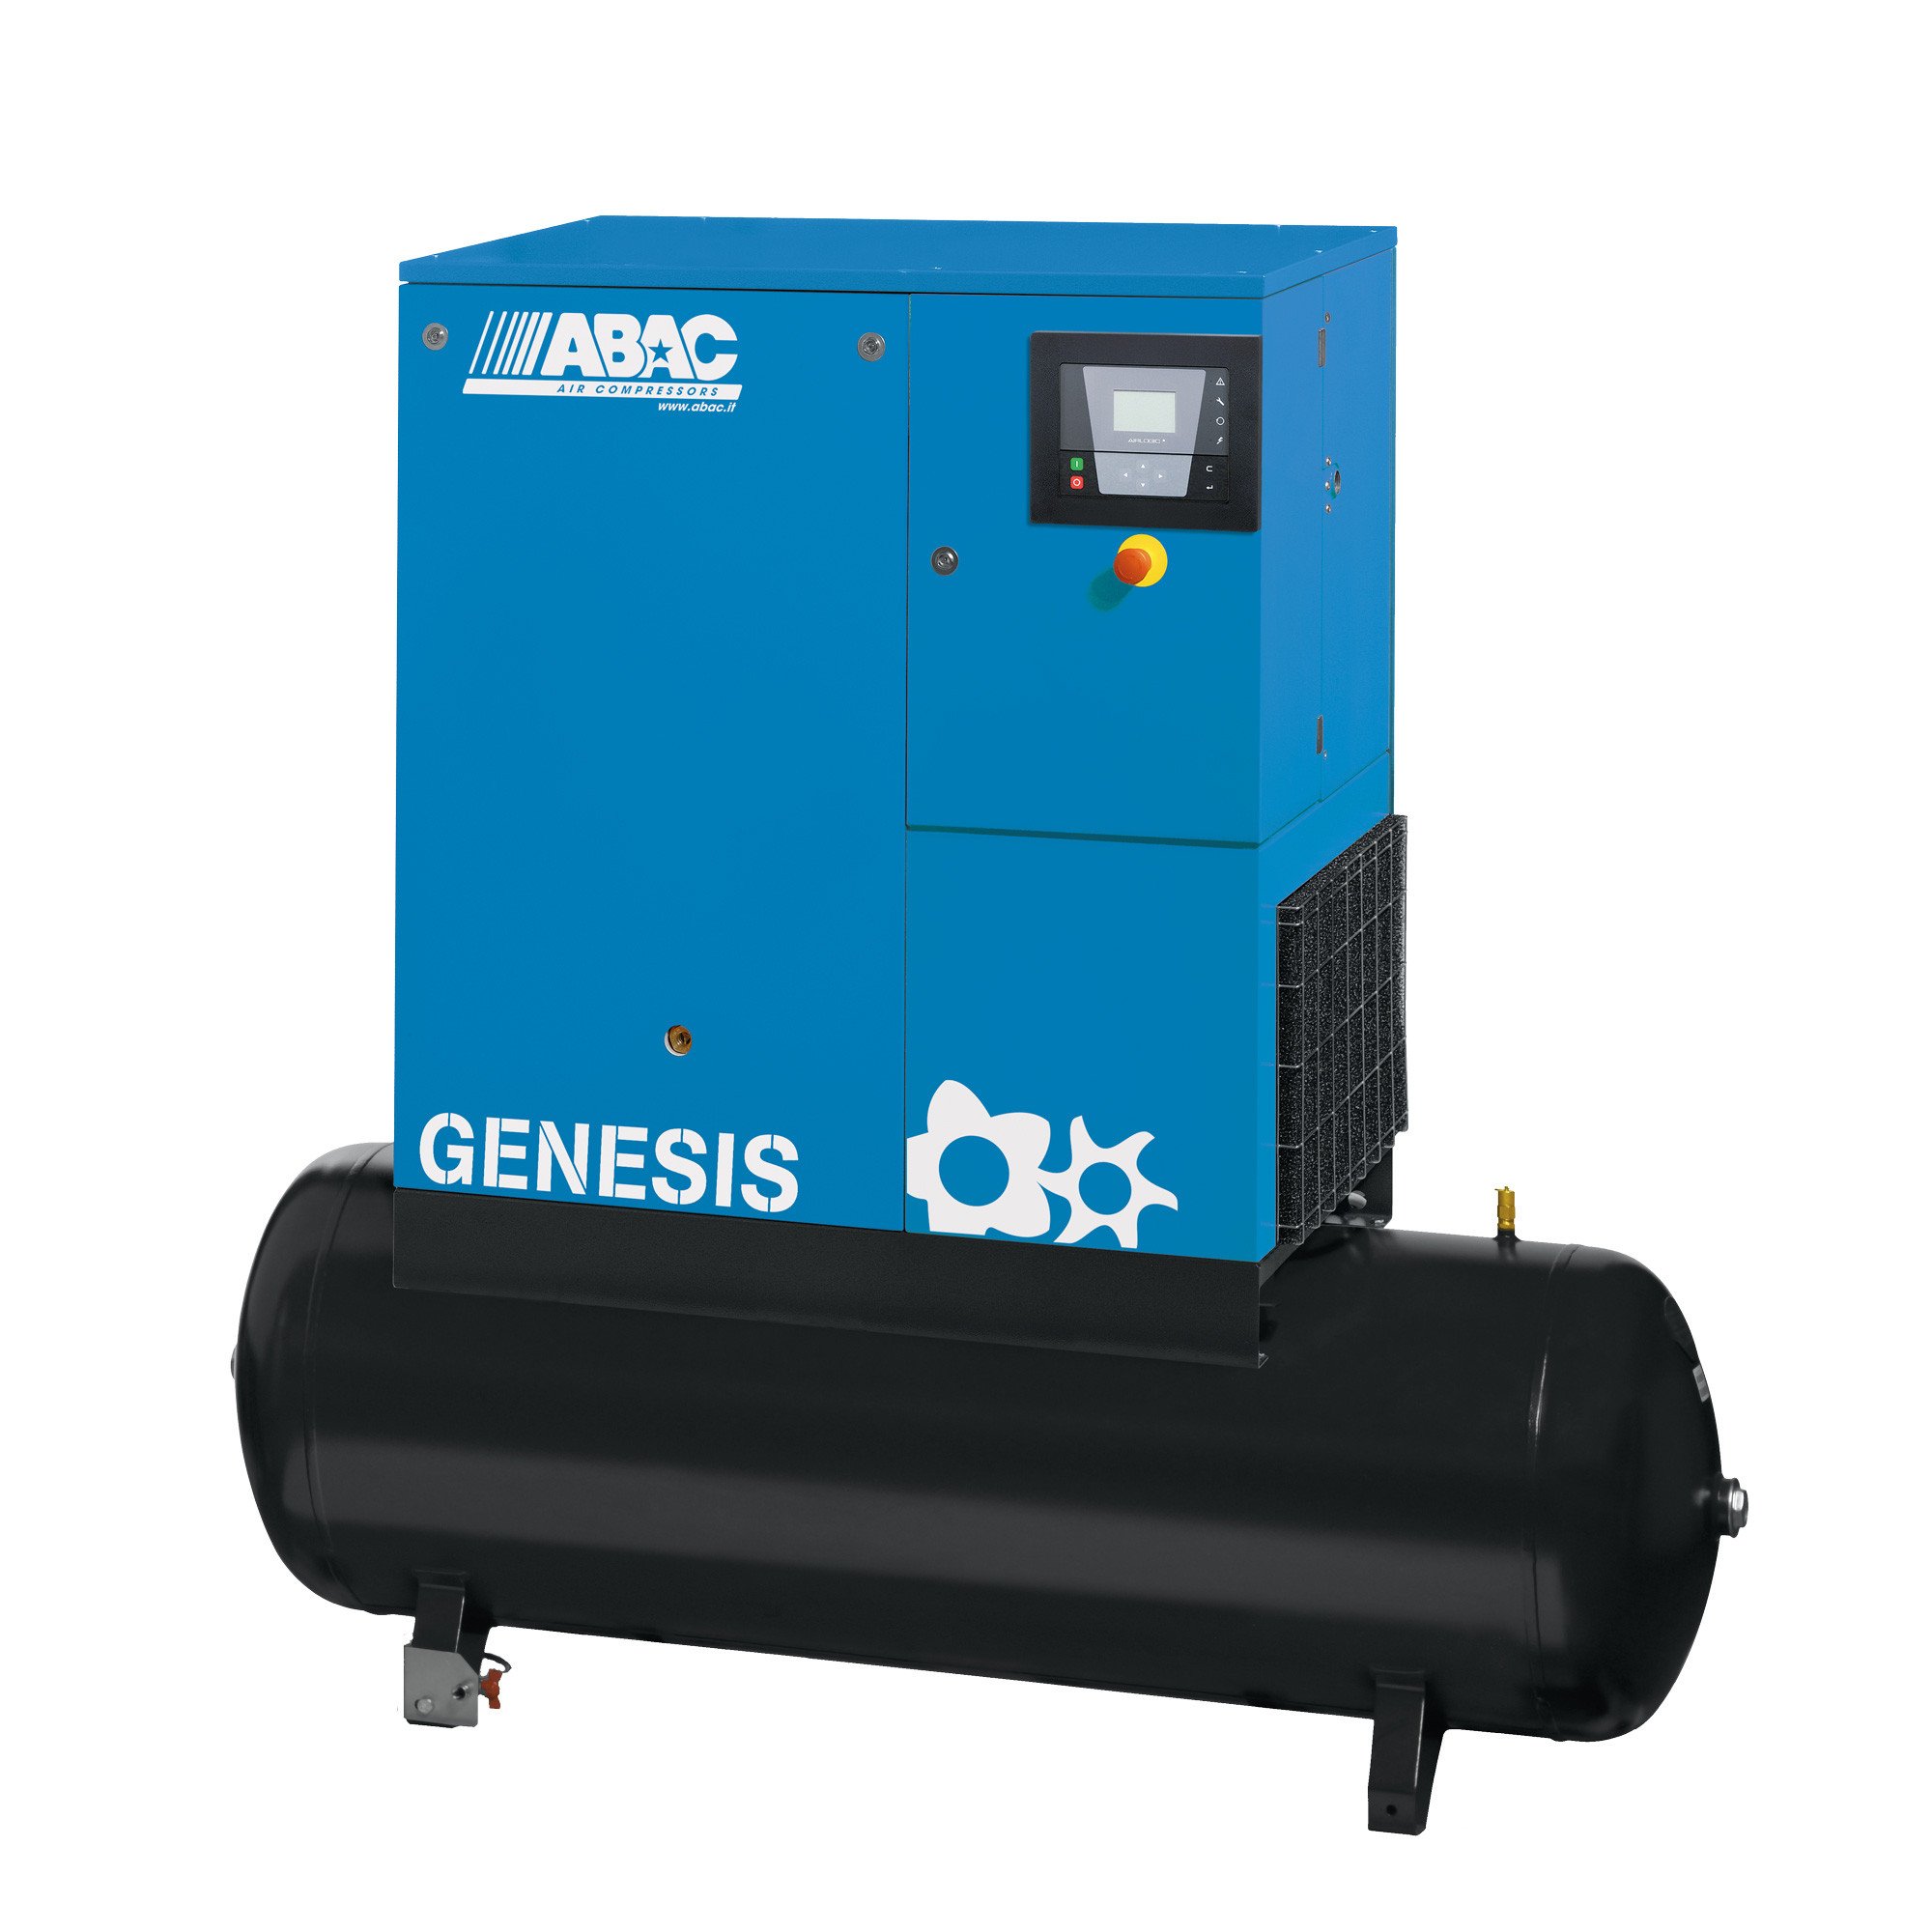 ABAC Genesis 500L, 31.08 CFM, 5.5 kW固定转速螺杆空压机| 31.08 CFM